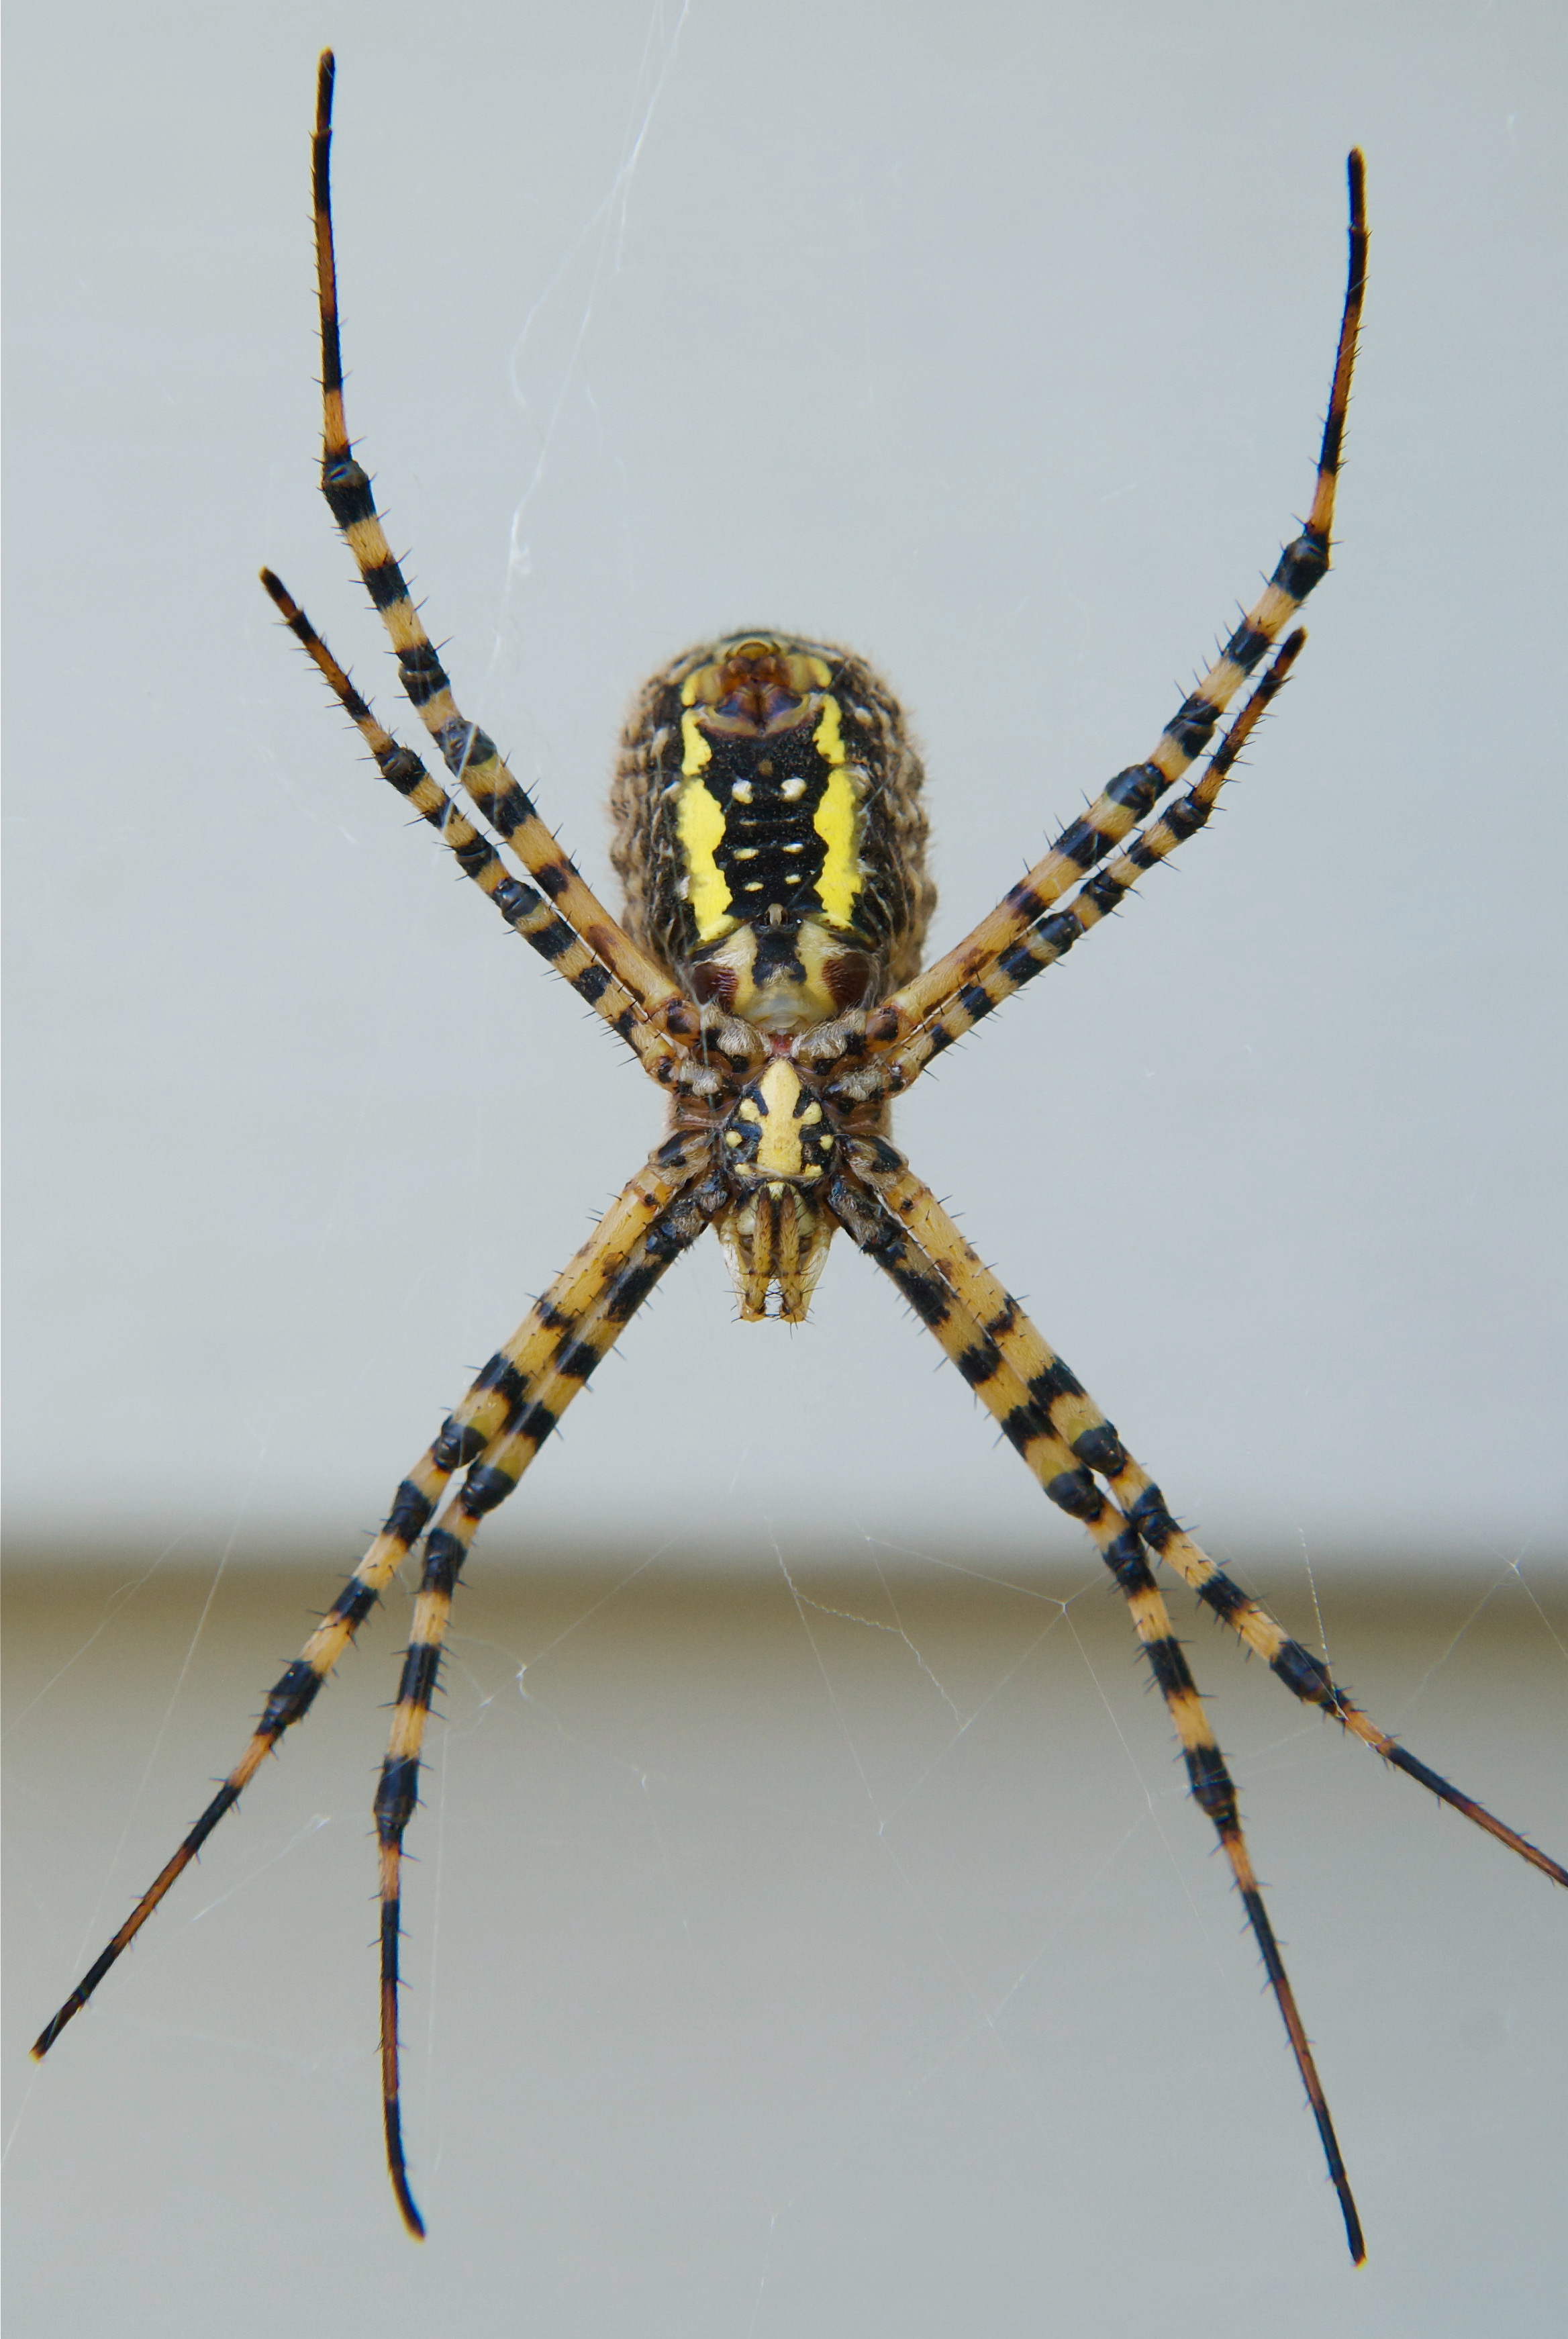 Banded Garden Spider (Argiope trifasciata) - Plants and Animals of Northeast Colorado